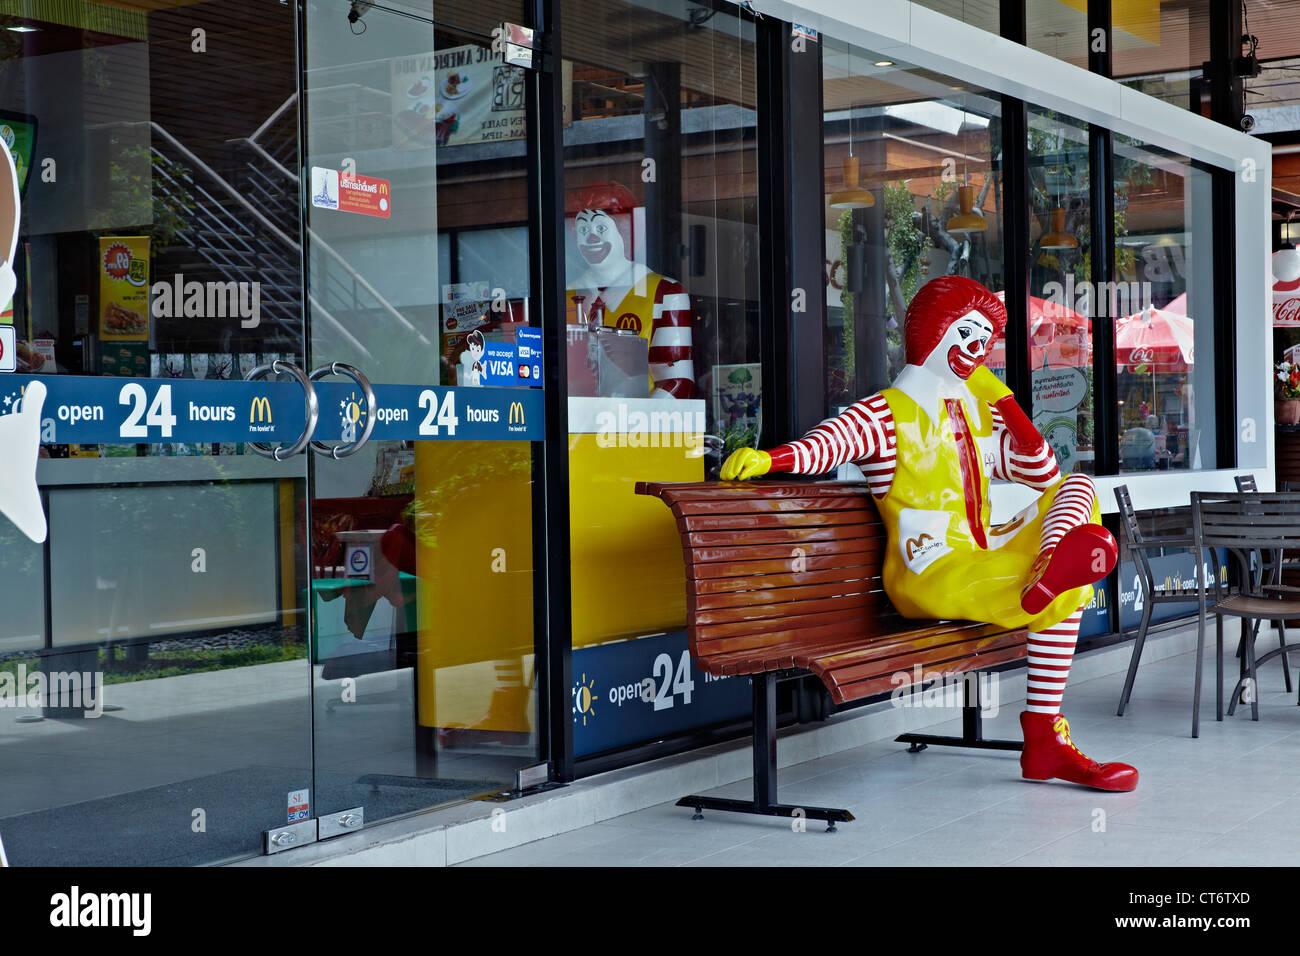 McDonald's restaurant featuring a seated Ronald McDonald figure. Thailand S. E. Asia. Stock Photo